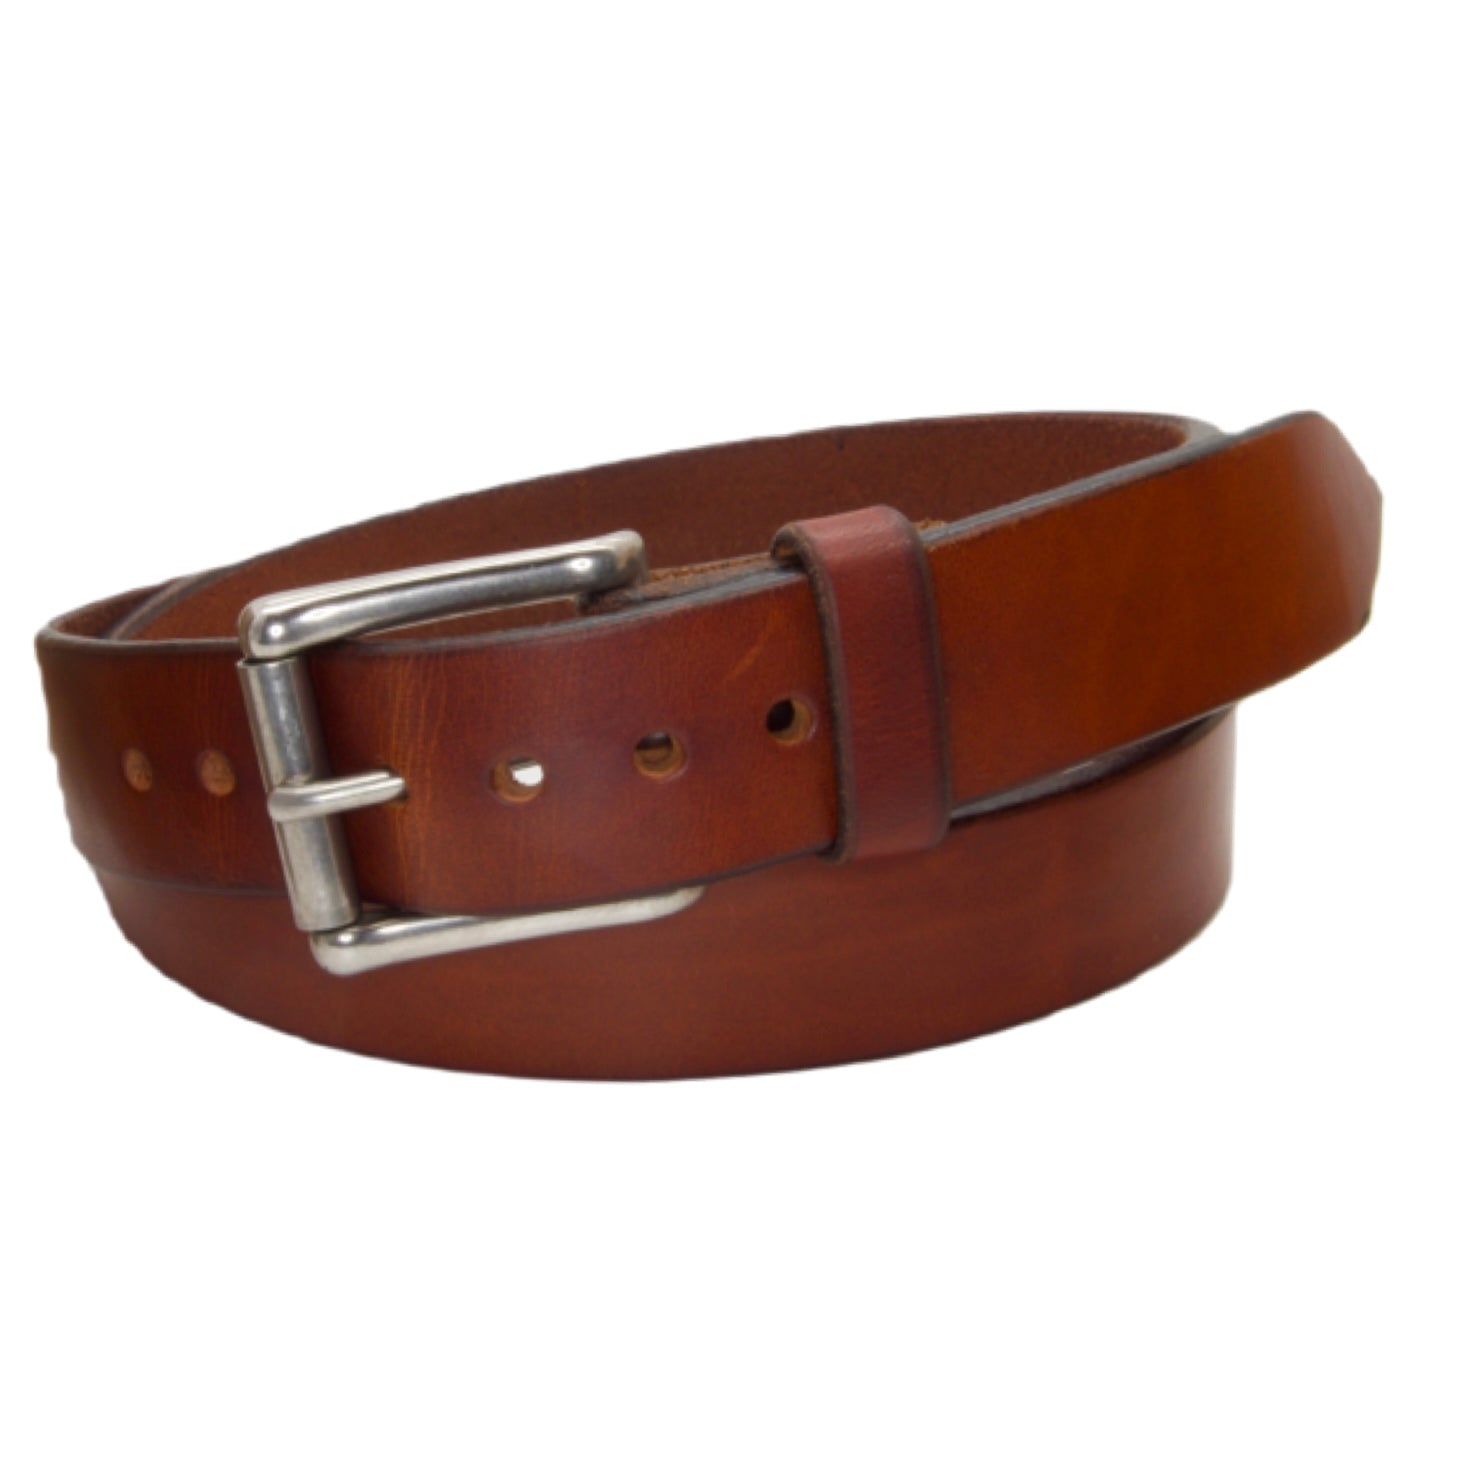 Plus Size Belts for Men, XL Men's Full Grain Leather Belt, Oversize Belts,  Handmade Size 46,48, 50, Custom Size, Big and Tall Belts for Men 